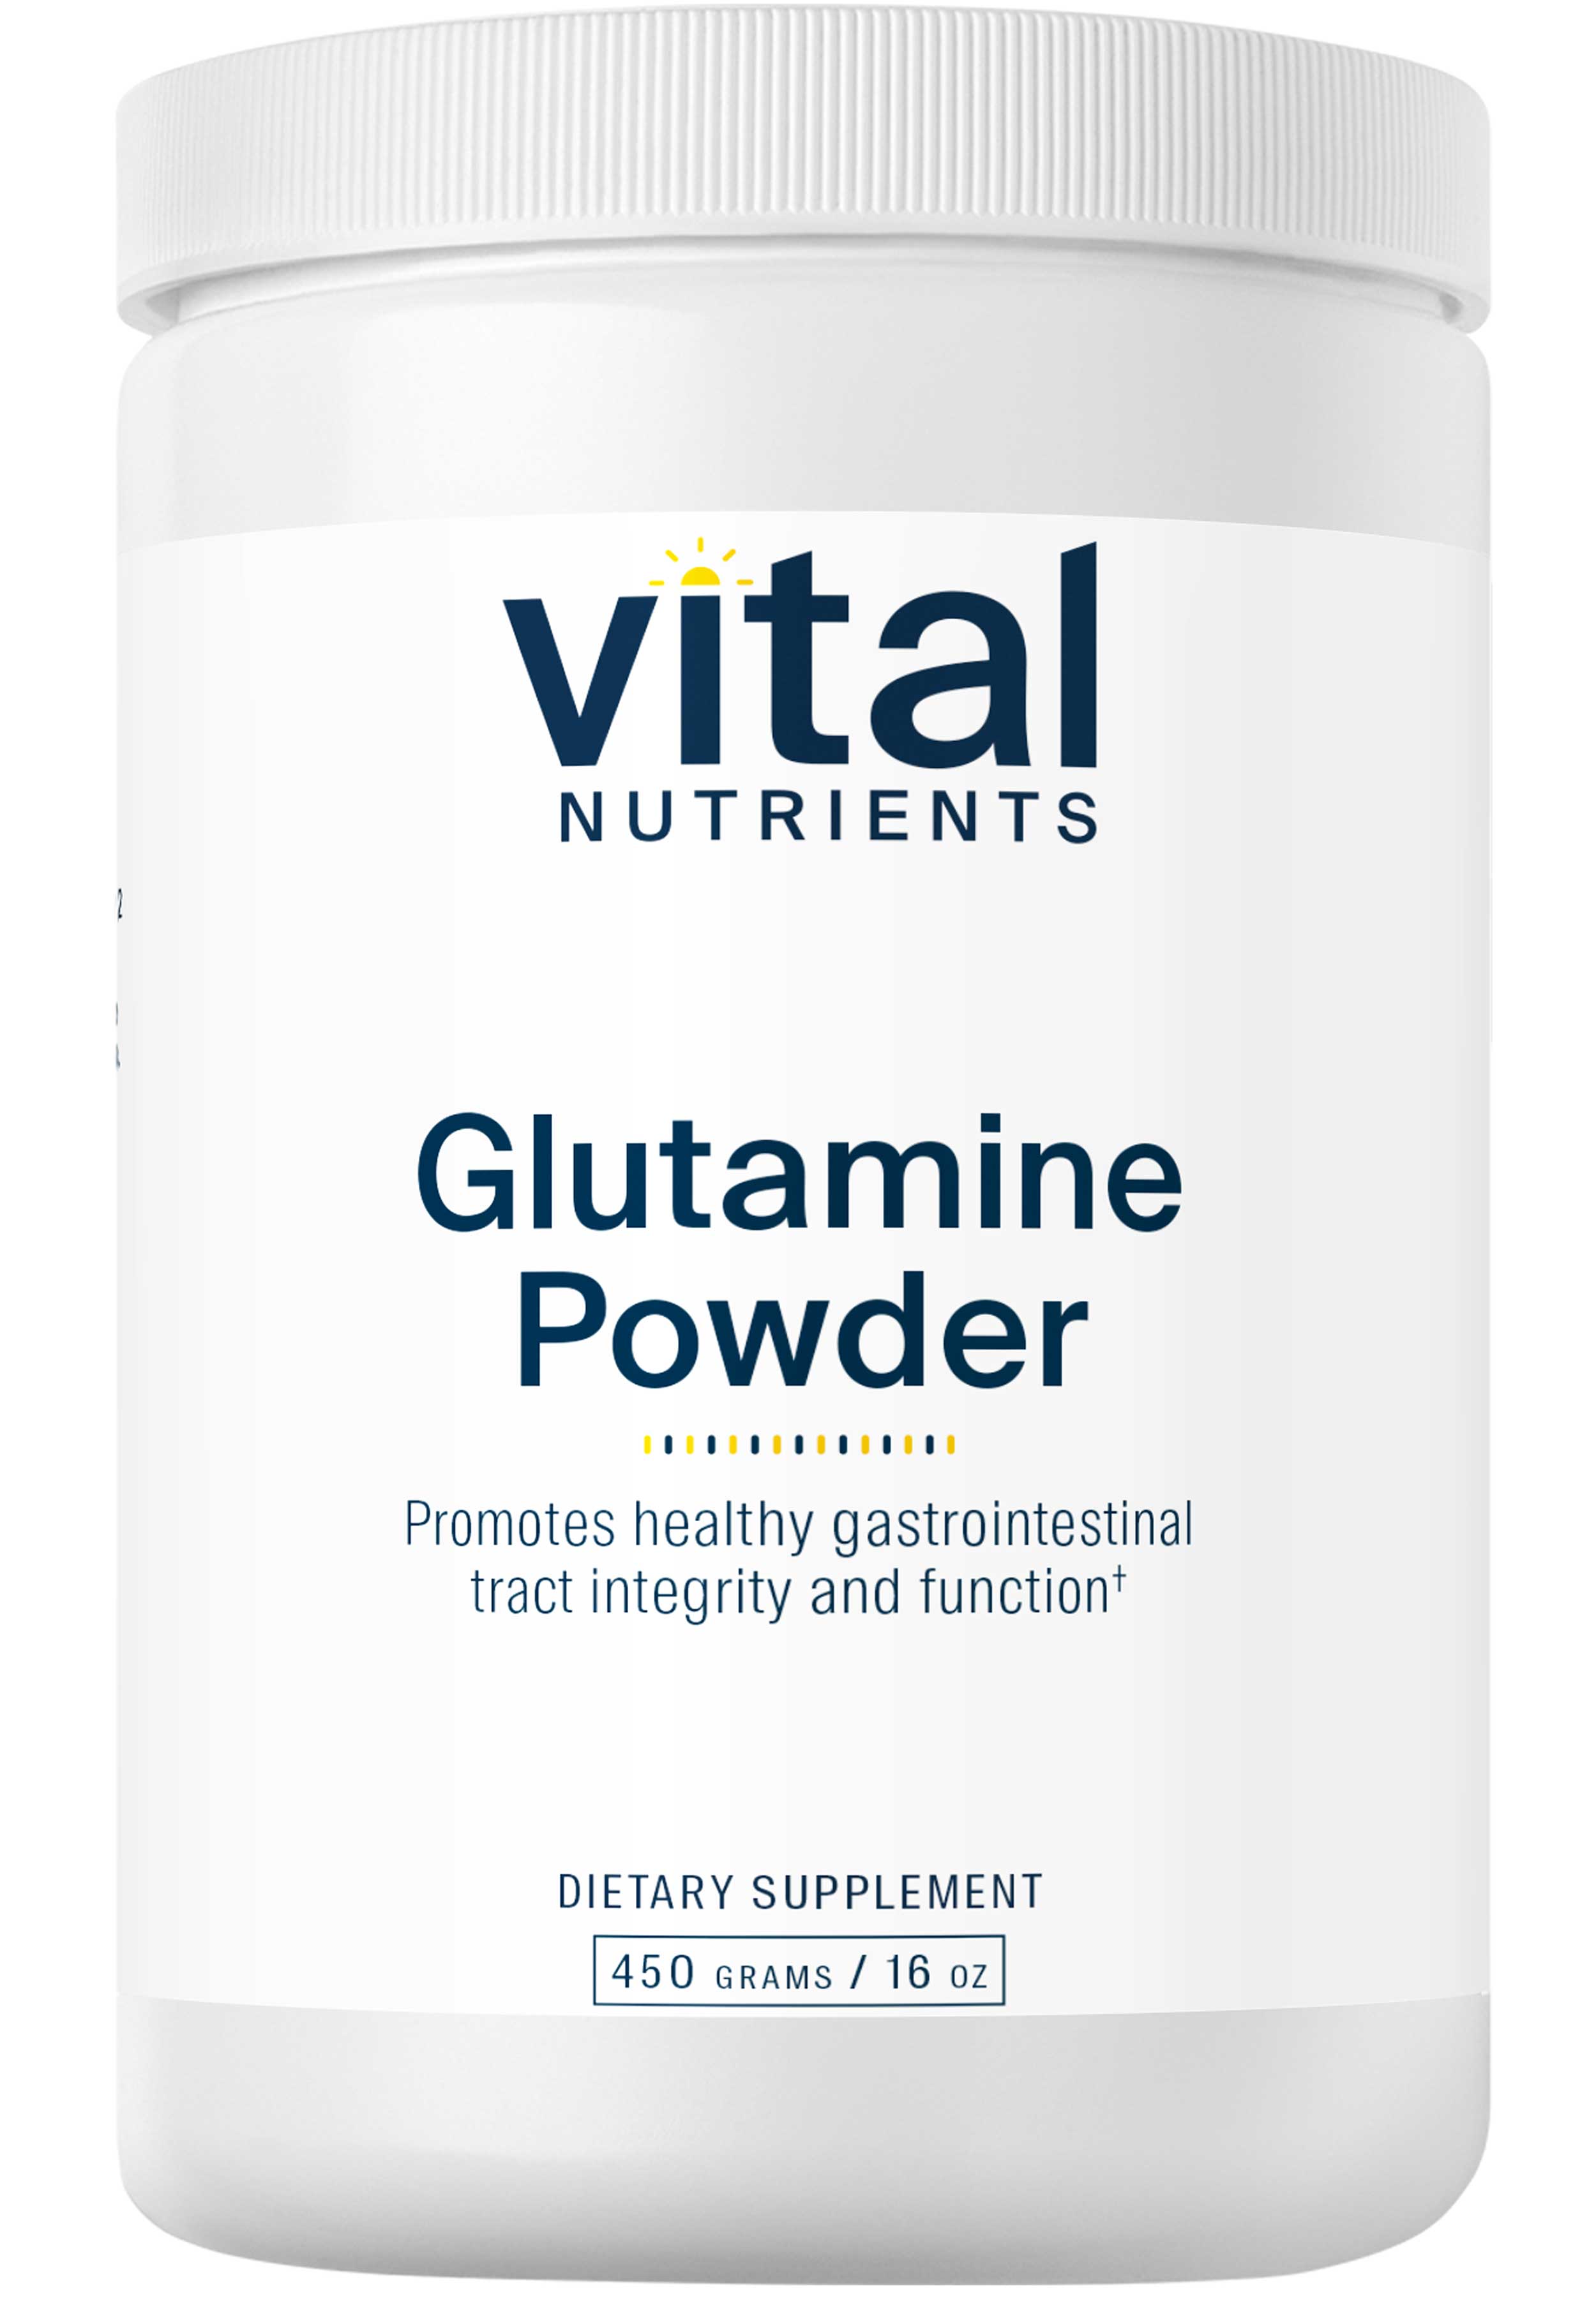 Vital Nutrients Glutamine Powder